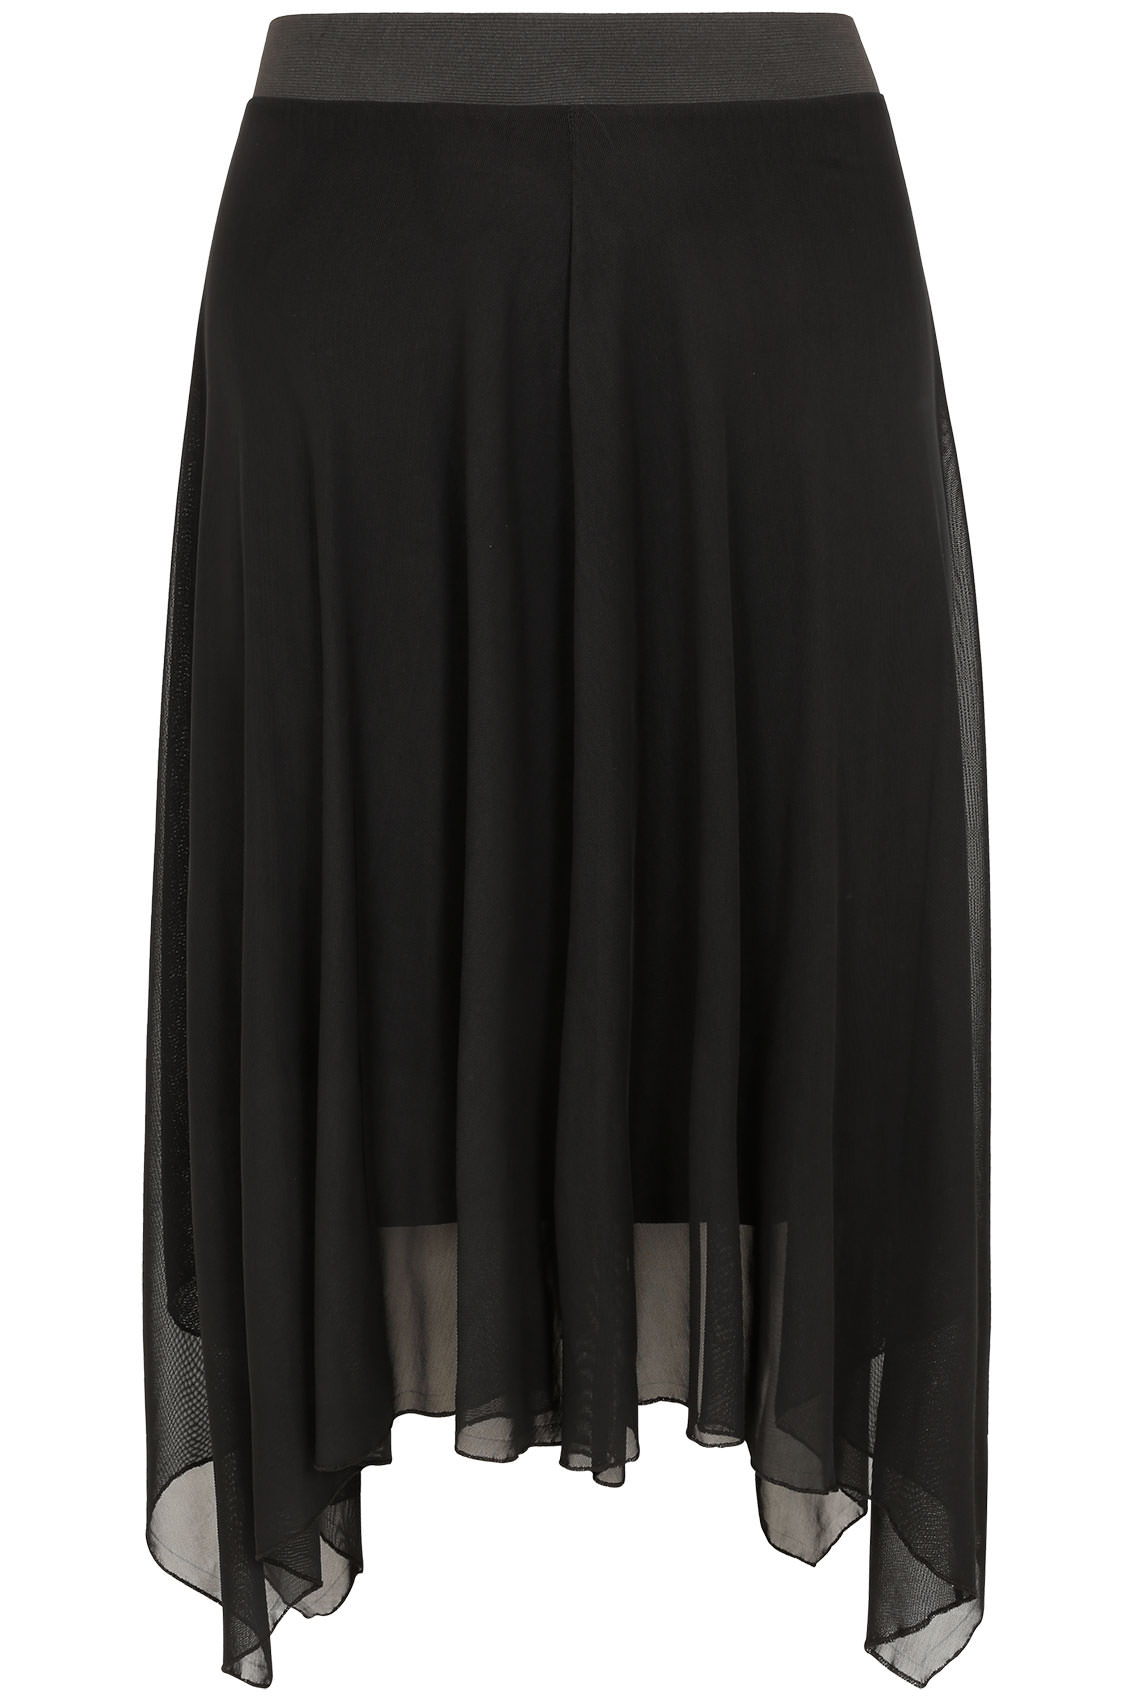 Black Mesh Midi Skirt With Hanky Hem, Plus size 16 to 32